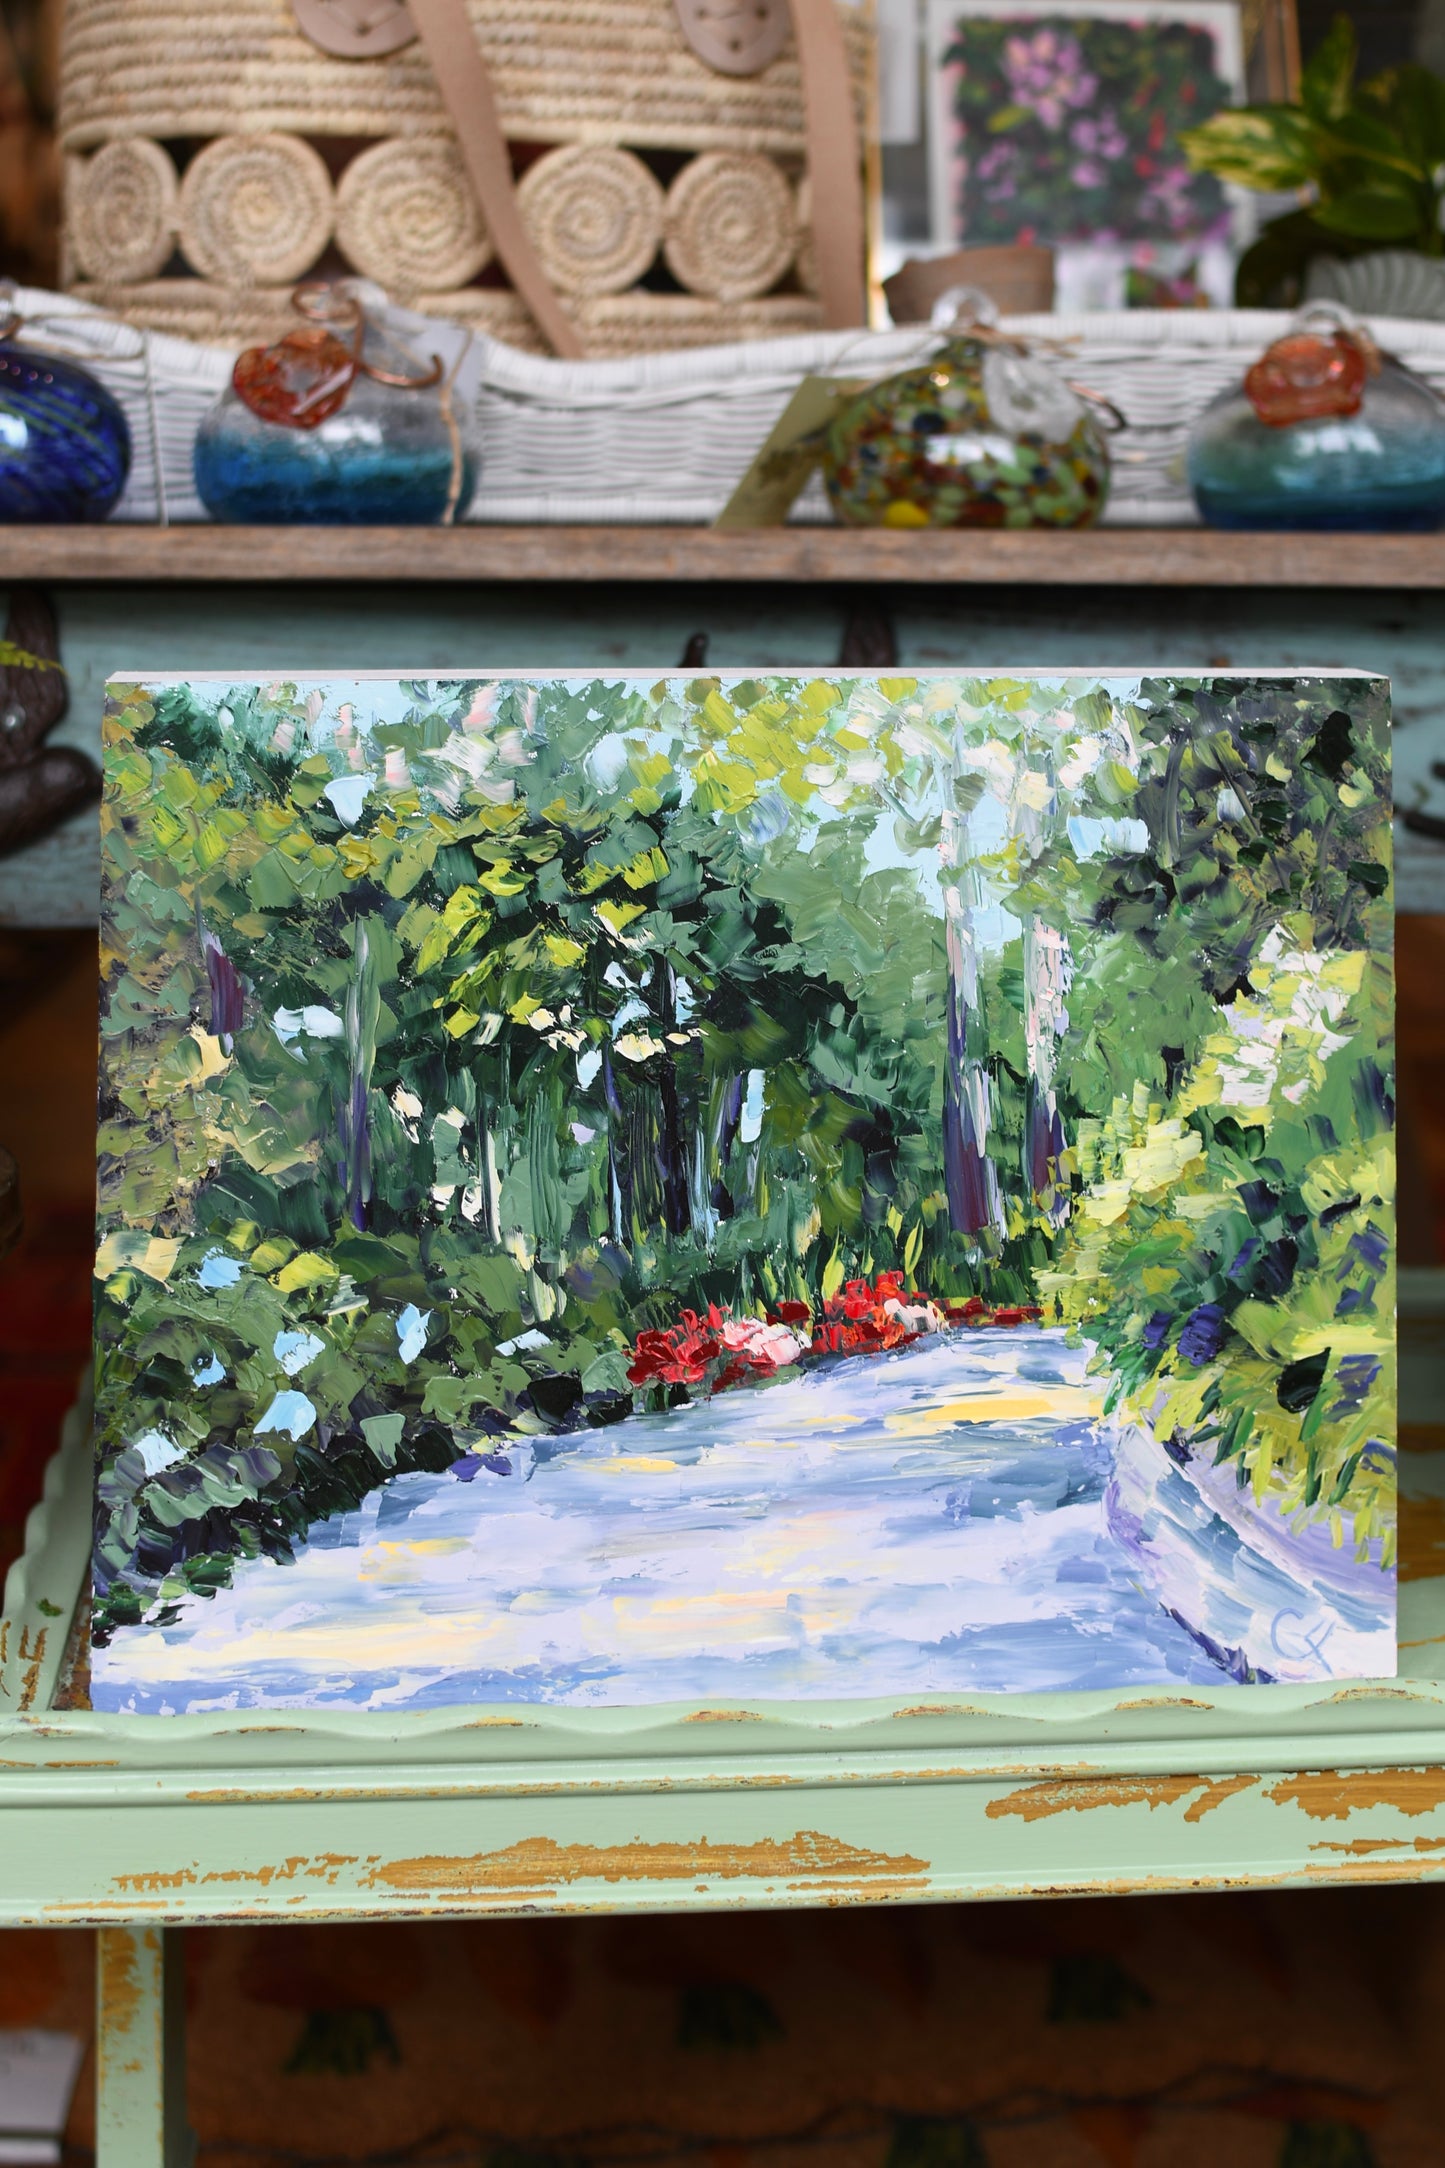 Let’s Explore The Garden Oil Painting